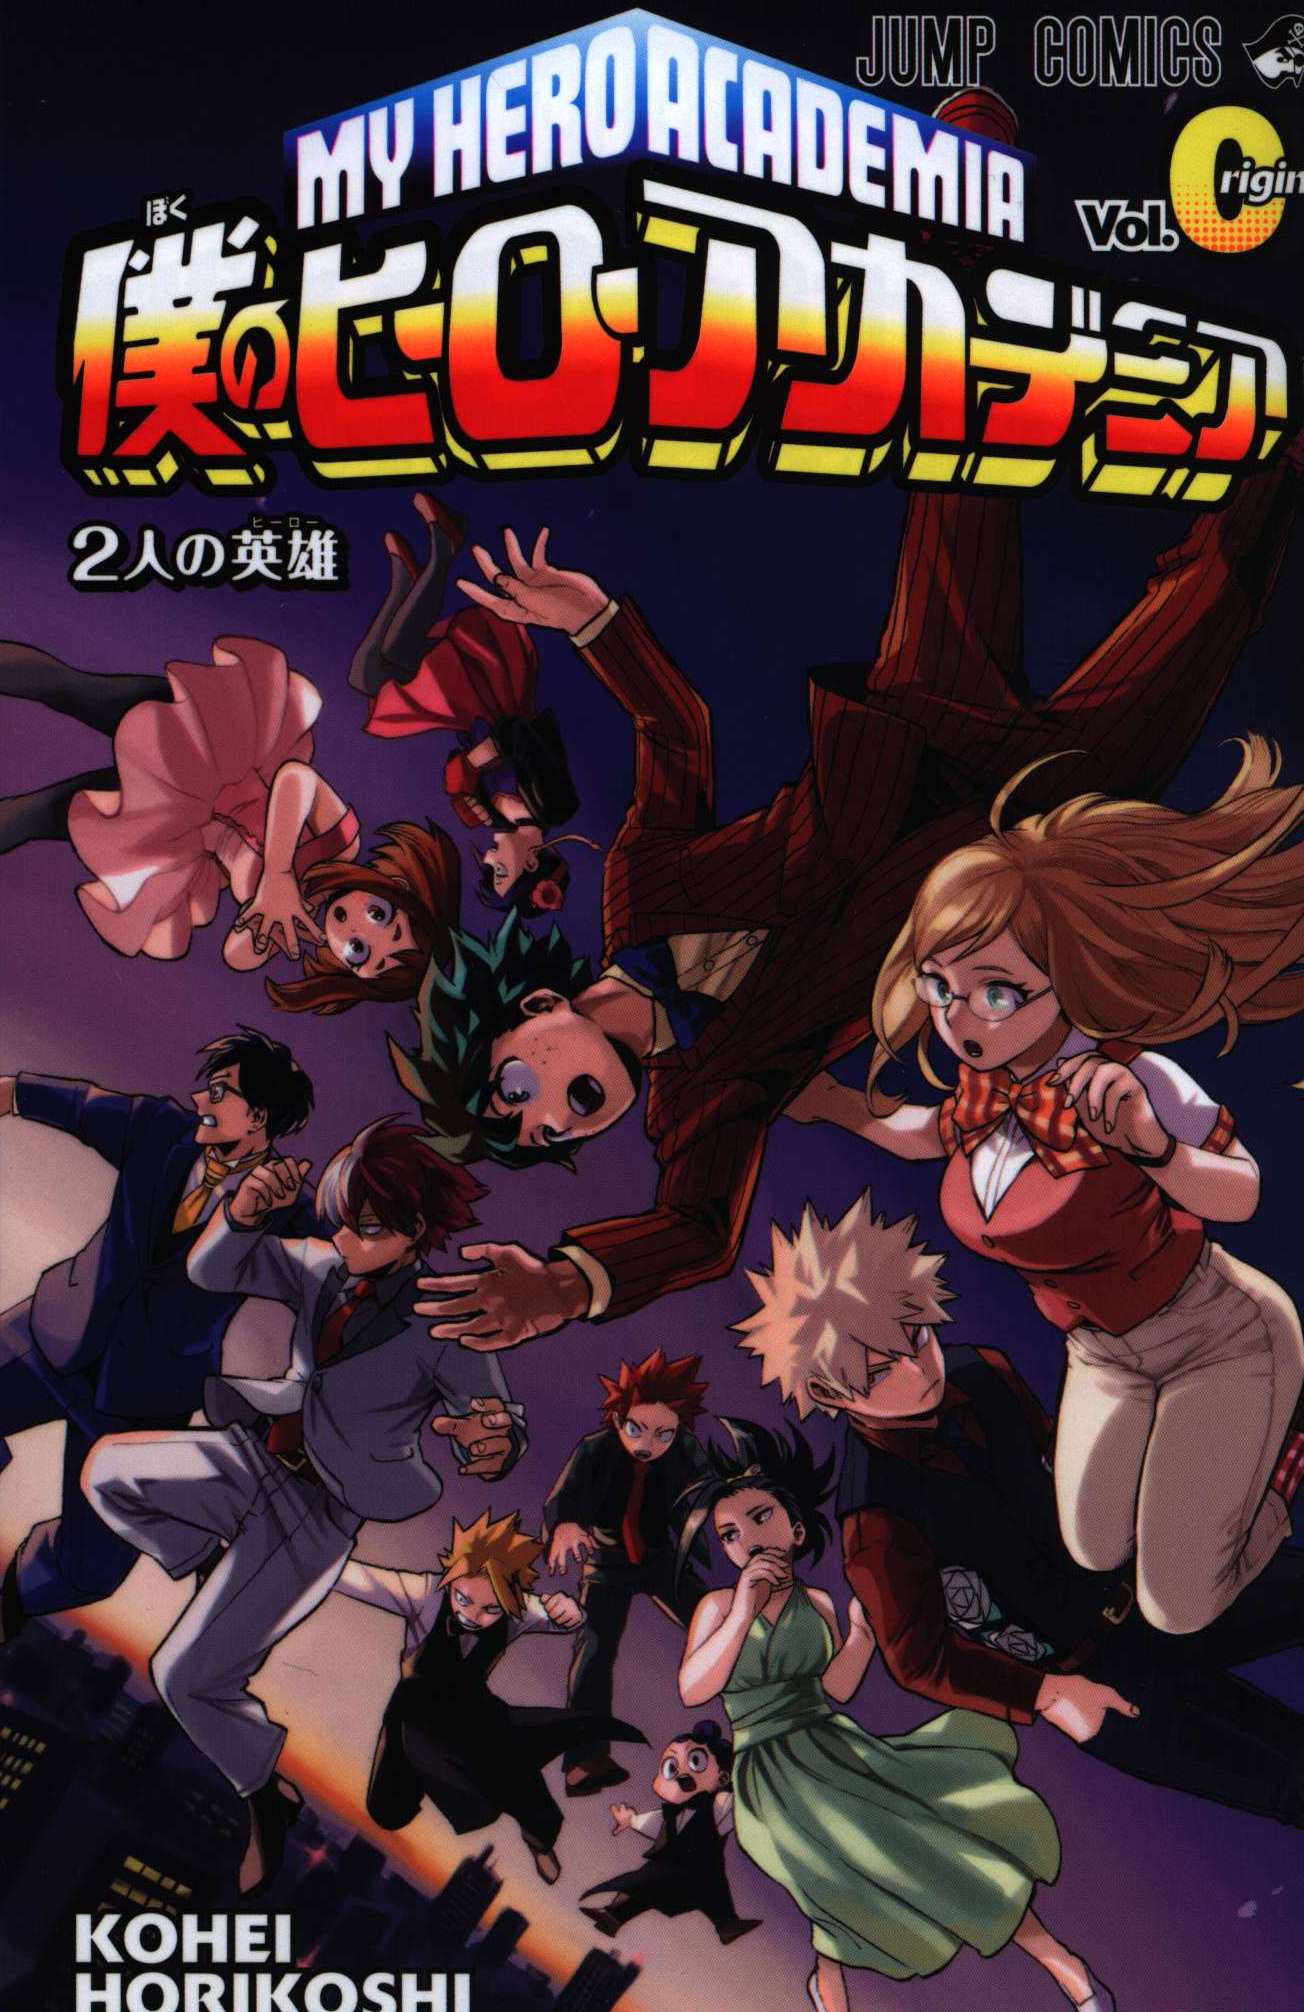 My Hero Academia “The Two Heroes” Special Movie Manga Vol. 0